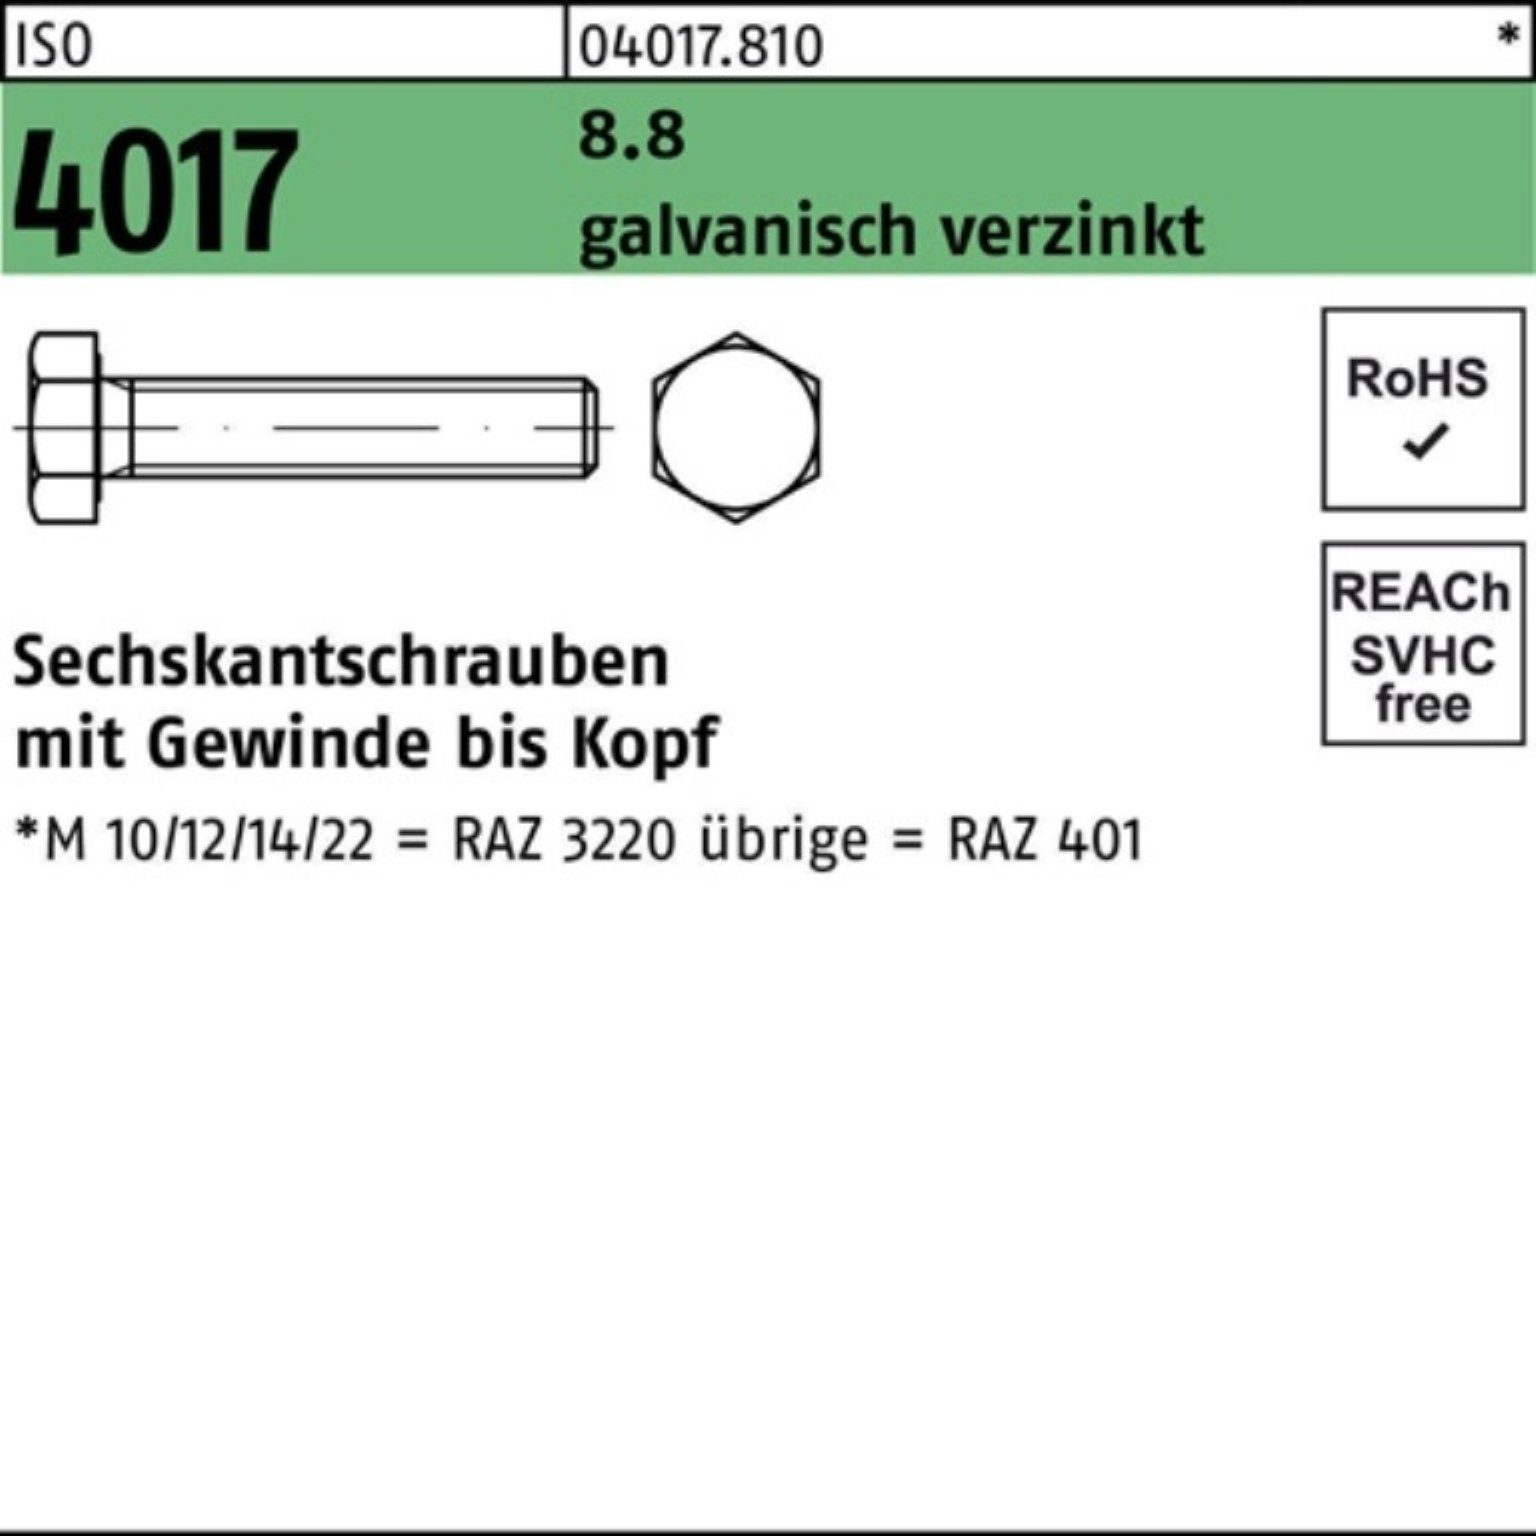 Bufab Sechskantschraube 200er Pack 75 St galv.verz. VG 4017 ISO 8.8 Sechskantschraube M8x 200